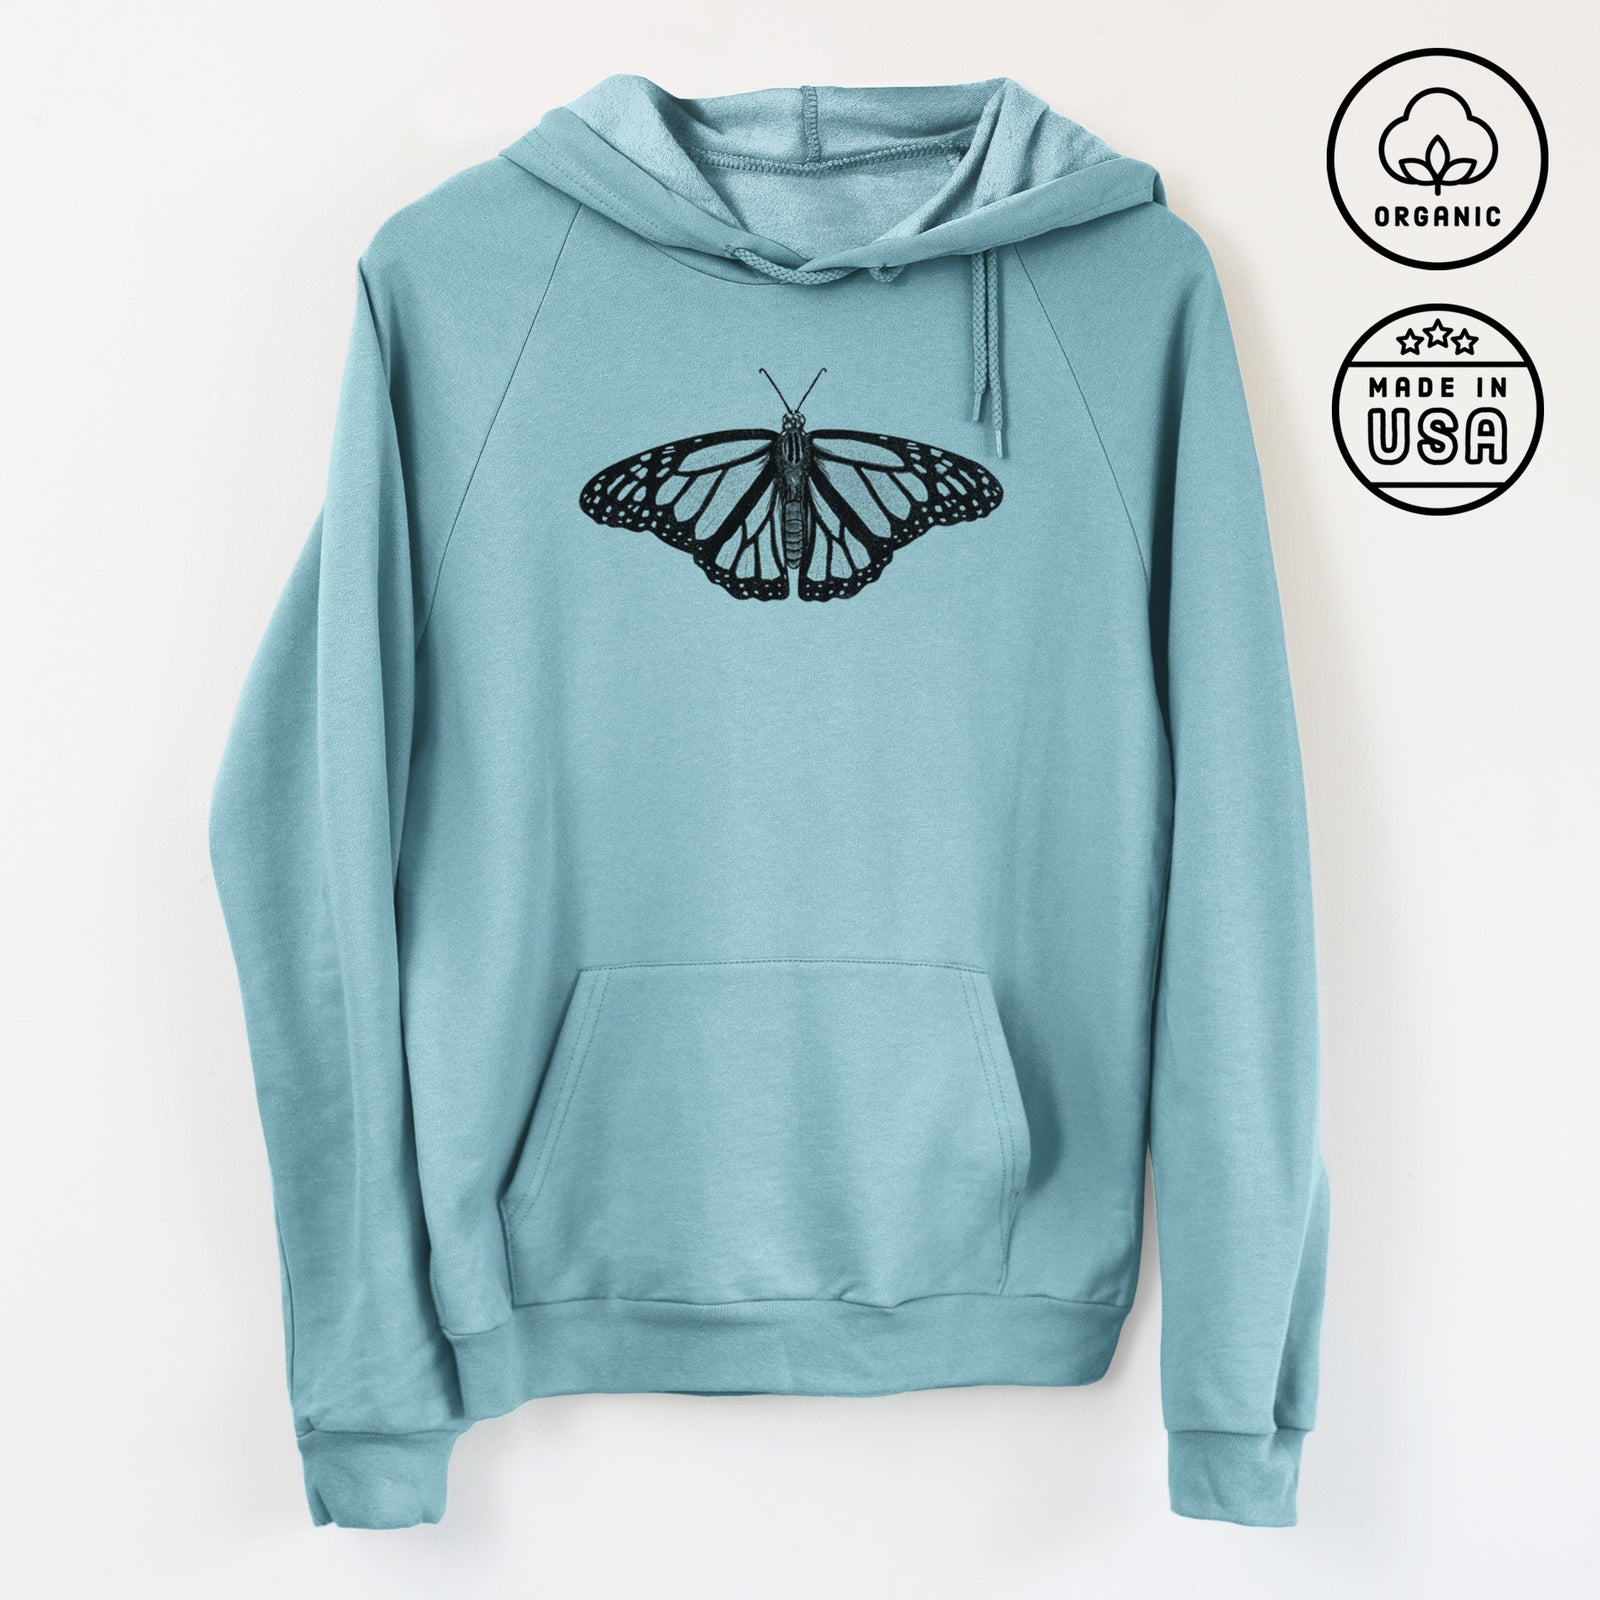 Emerging Monarch Butterfly 100% Organic Cotton T-Shirt for Women